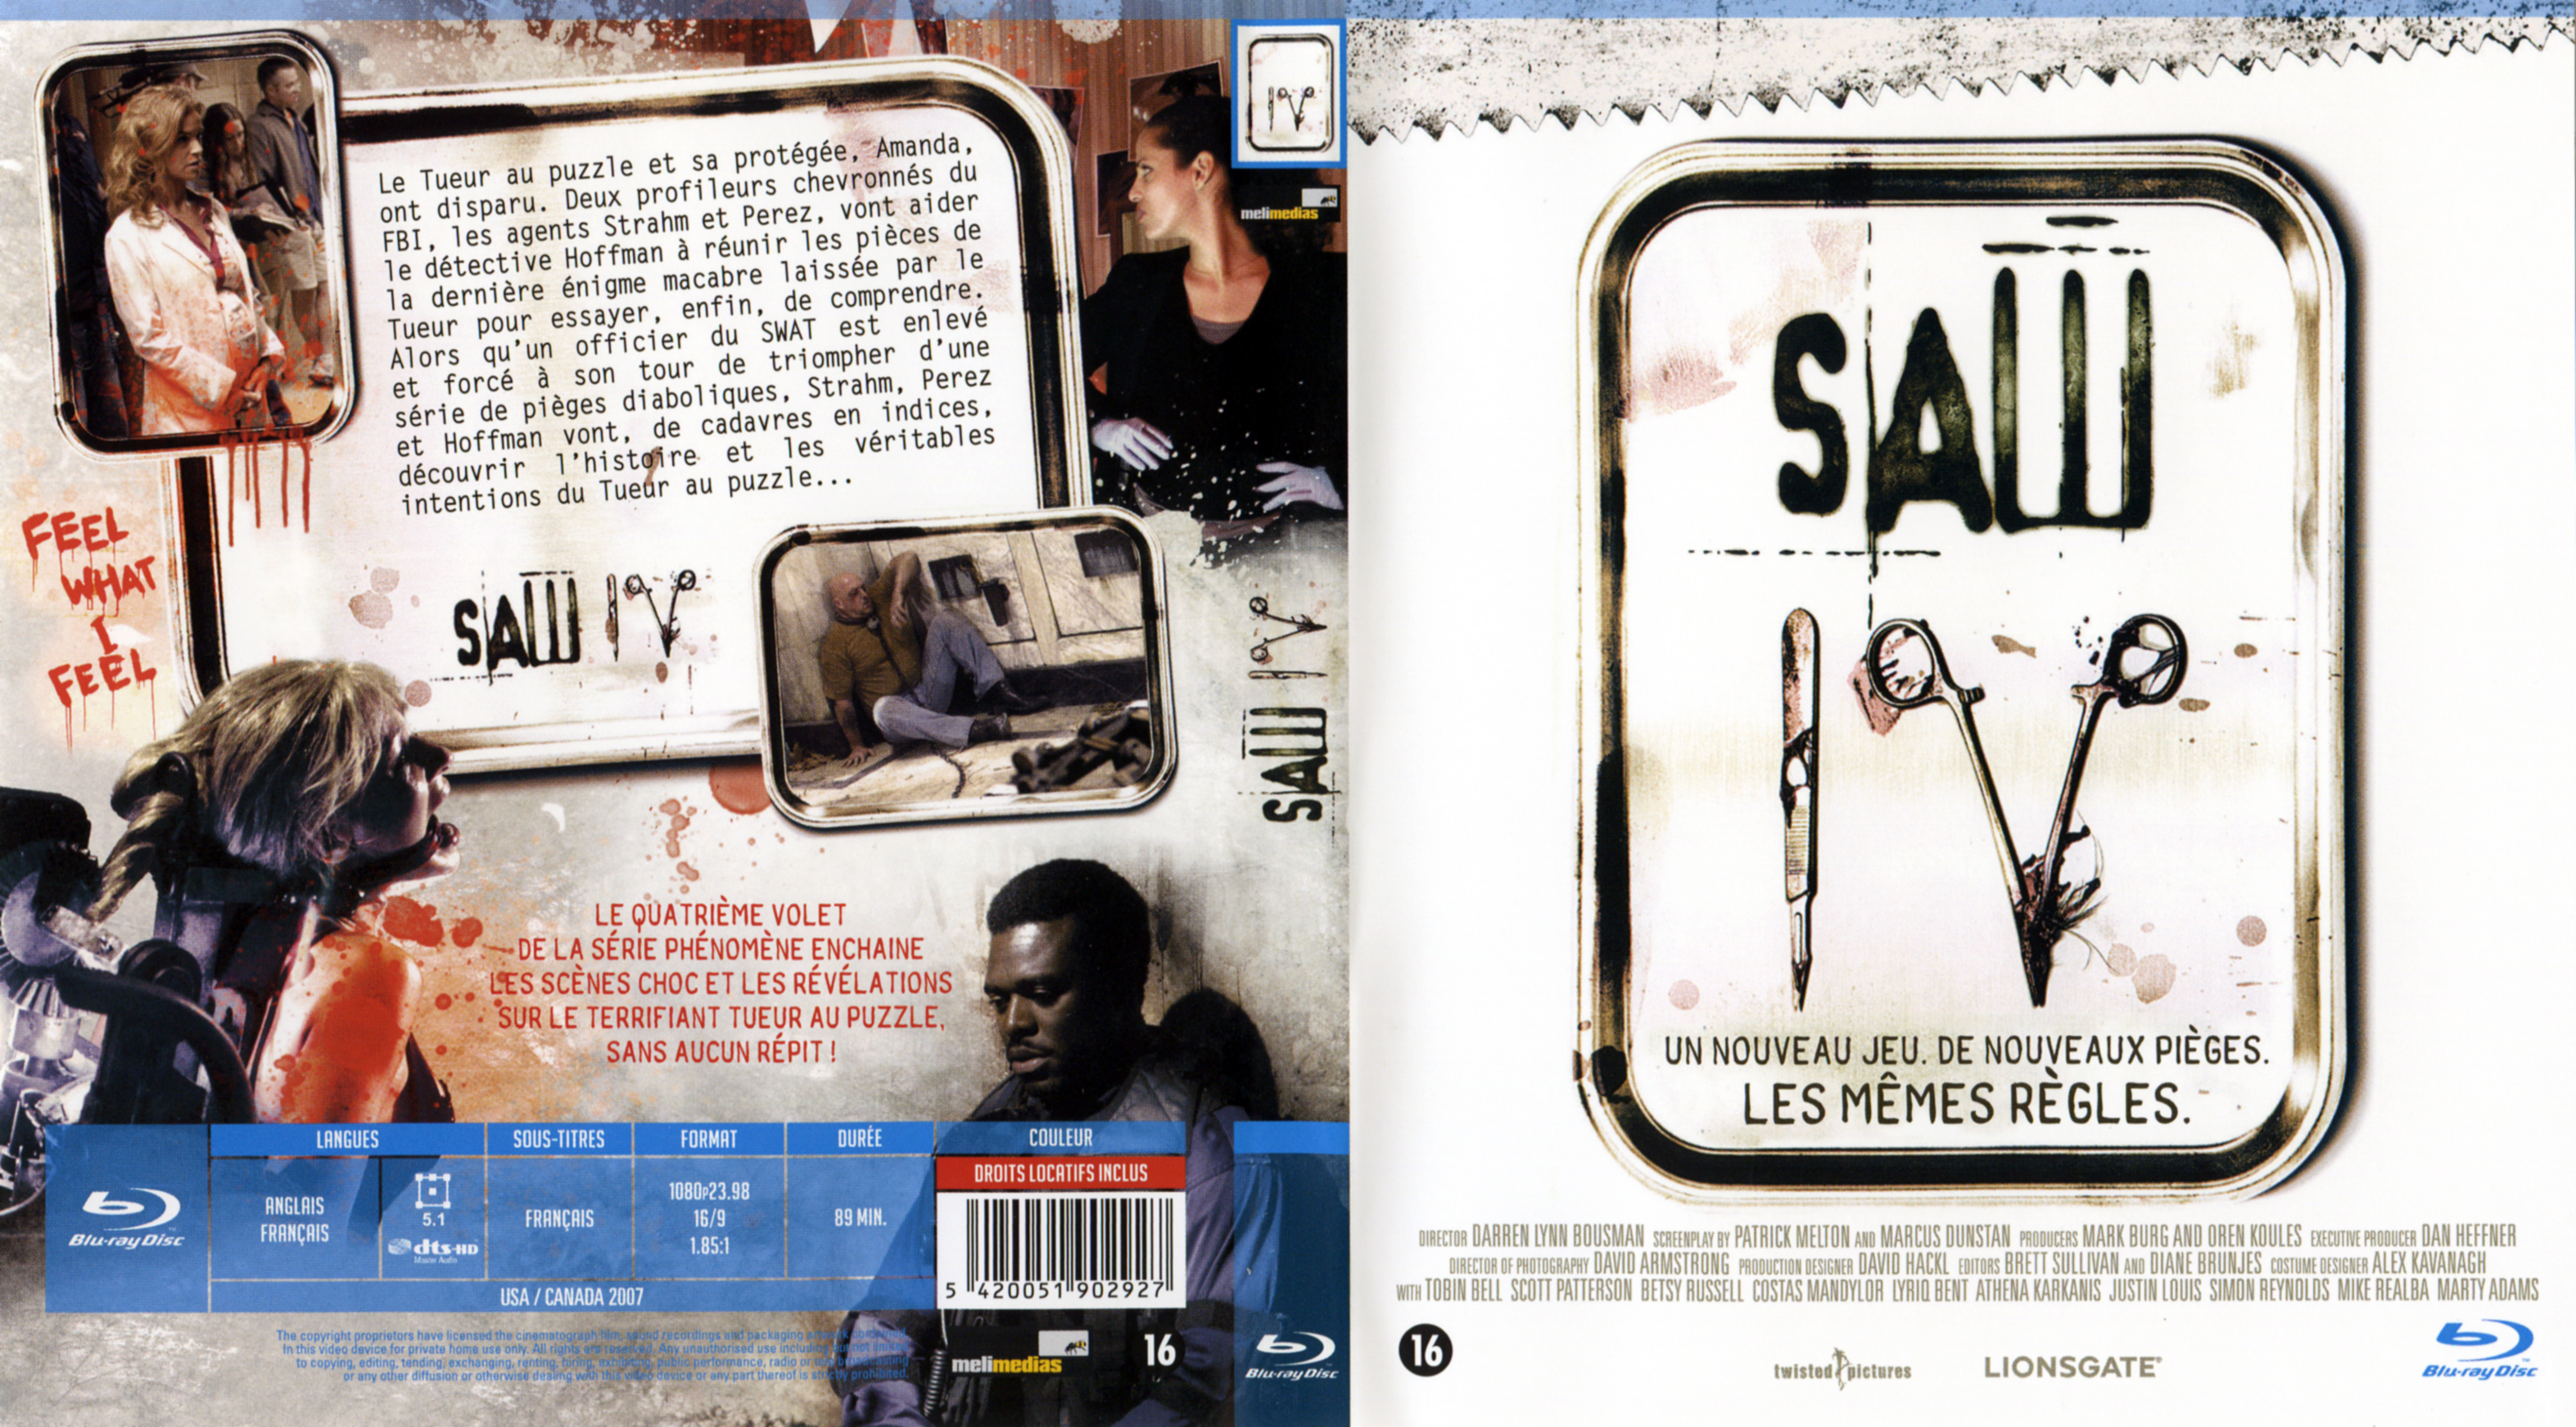 Jaquette DVD Saw 4 (BLU-RAY) v2